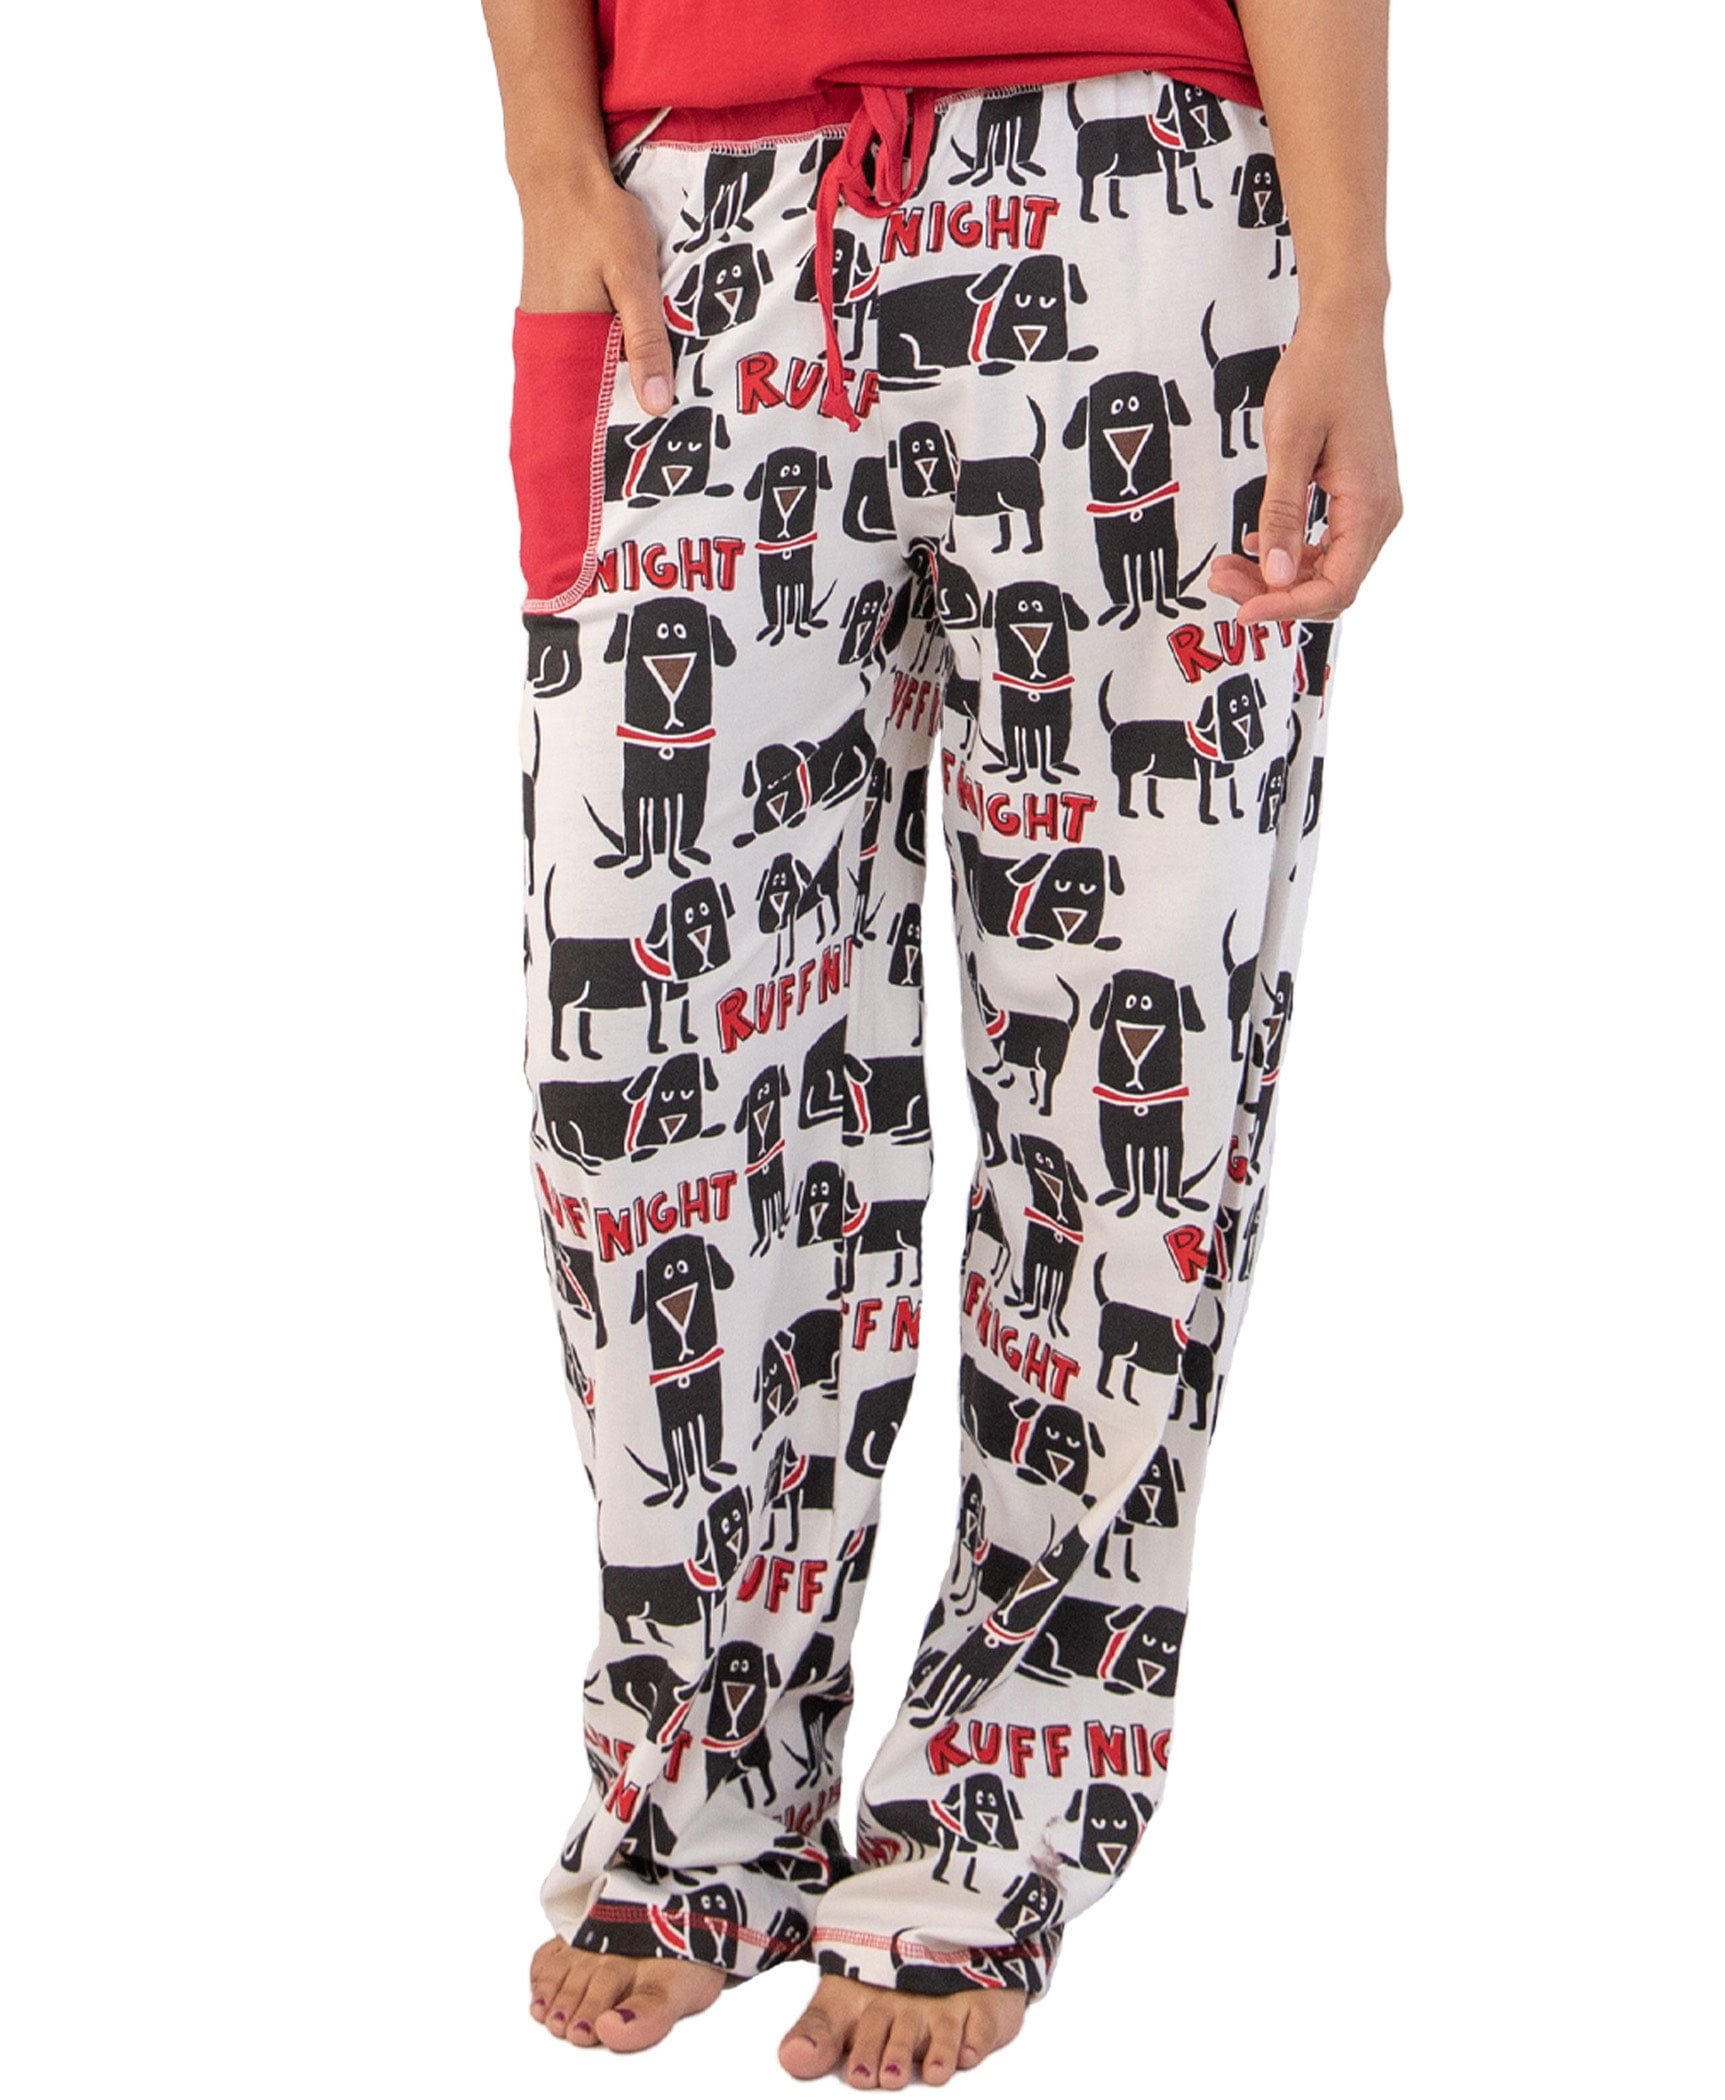 Girl dog pajamas